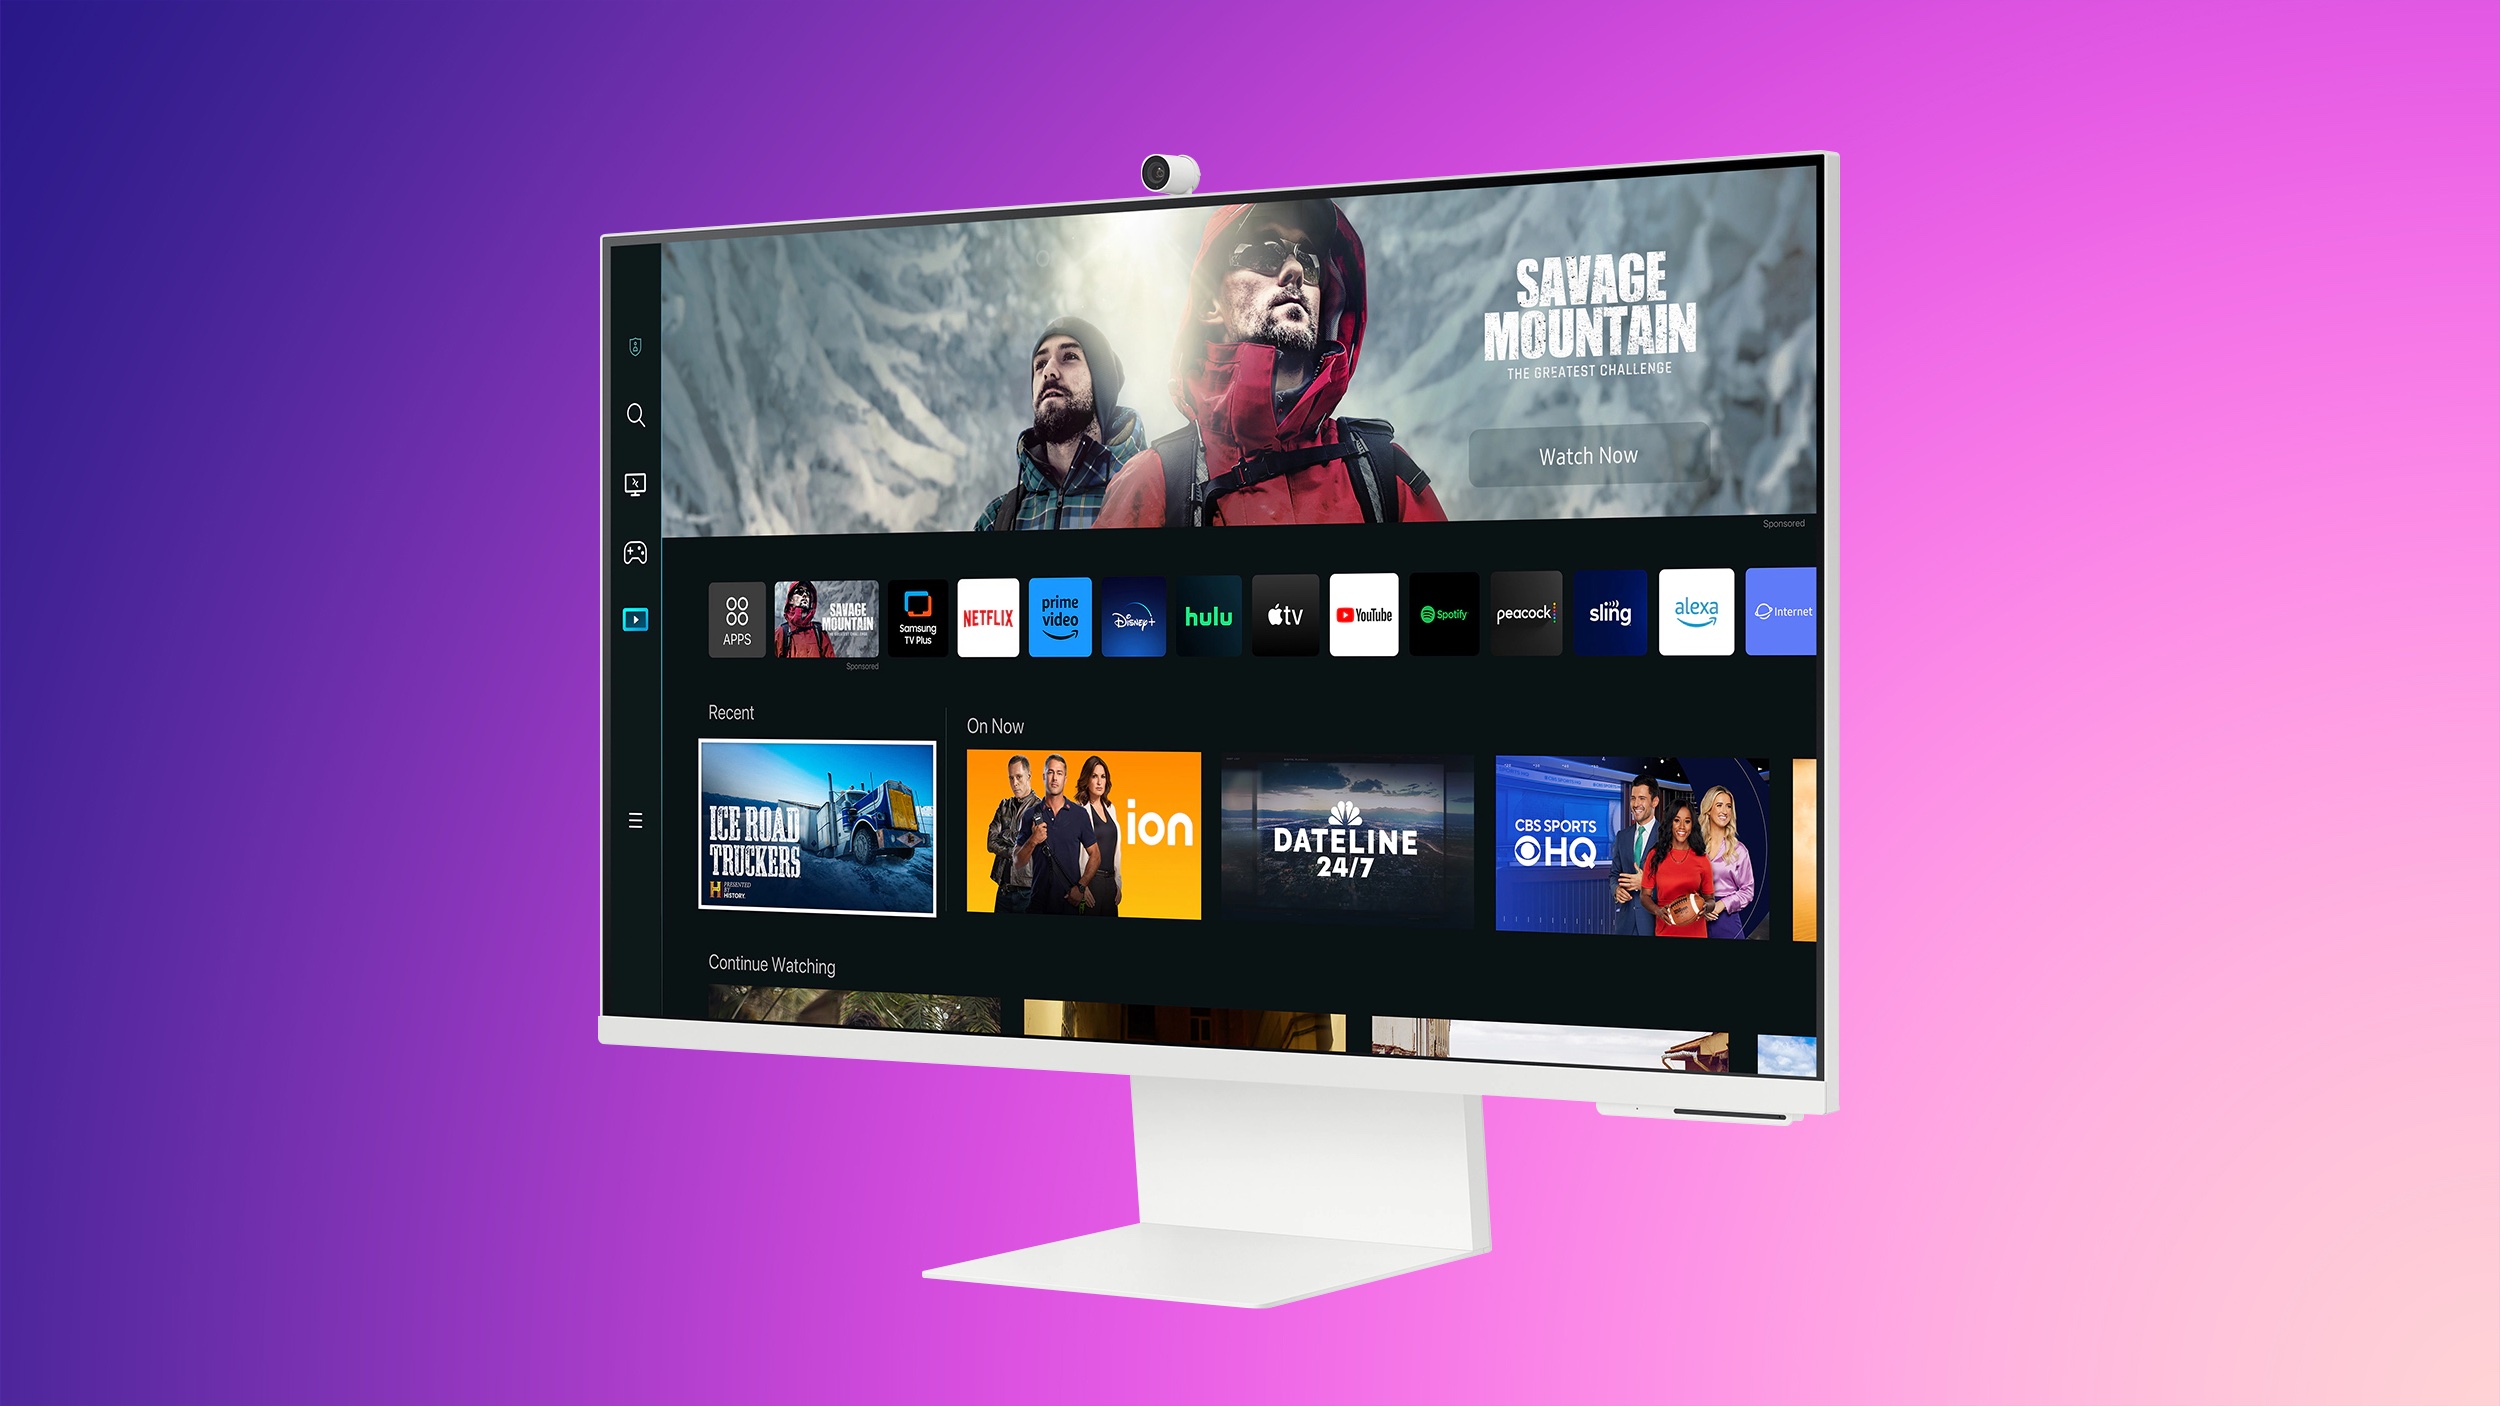 samsung-smart-monitor-m8-purple.jpg